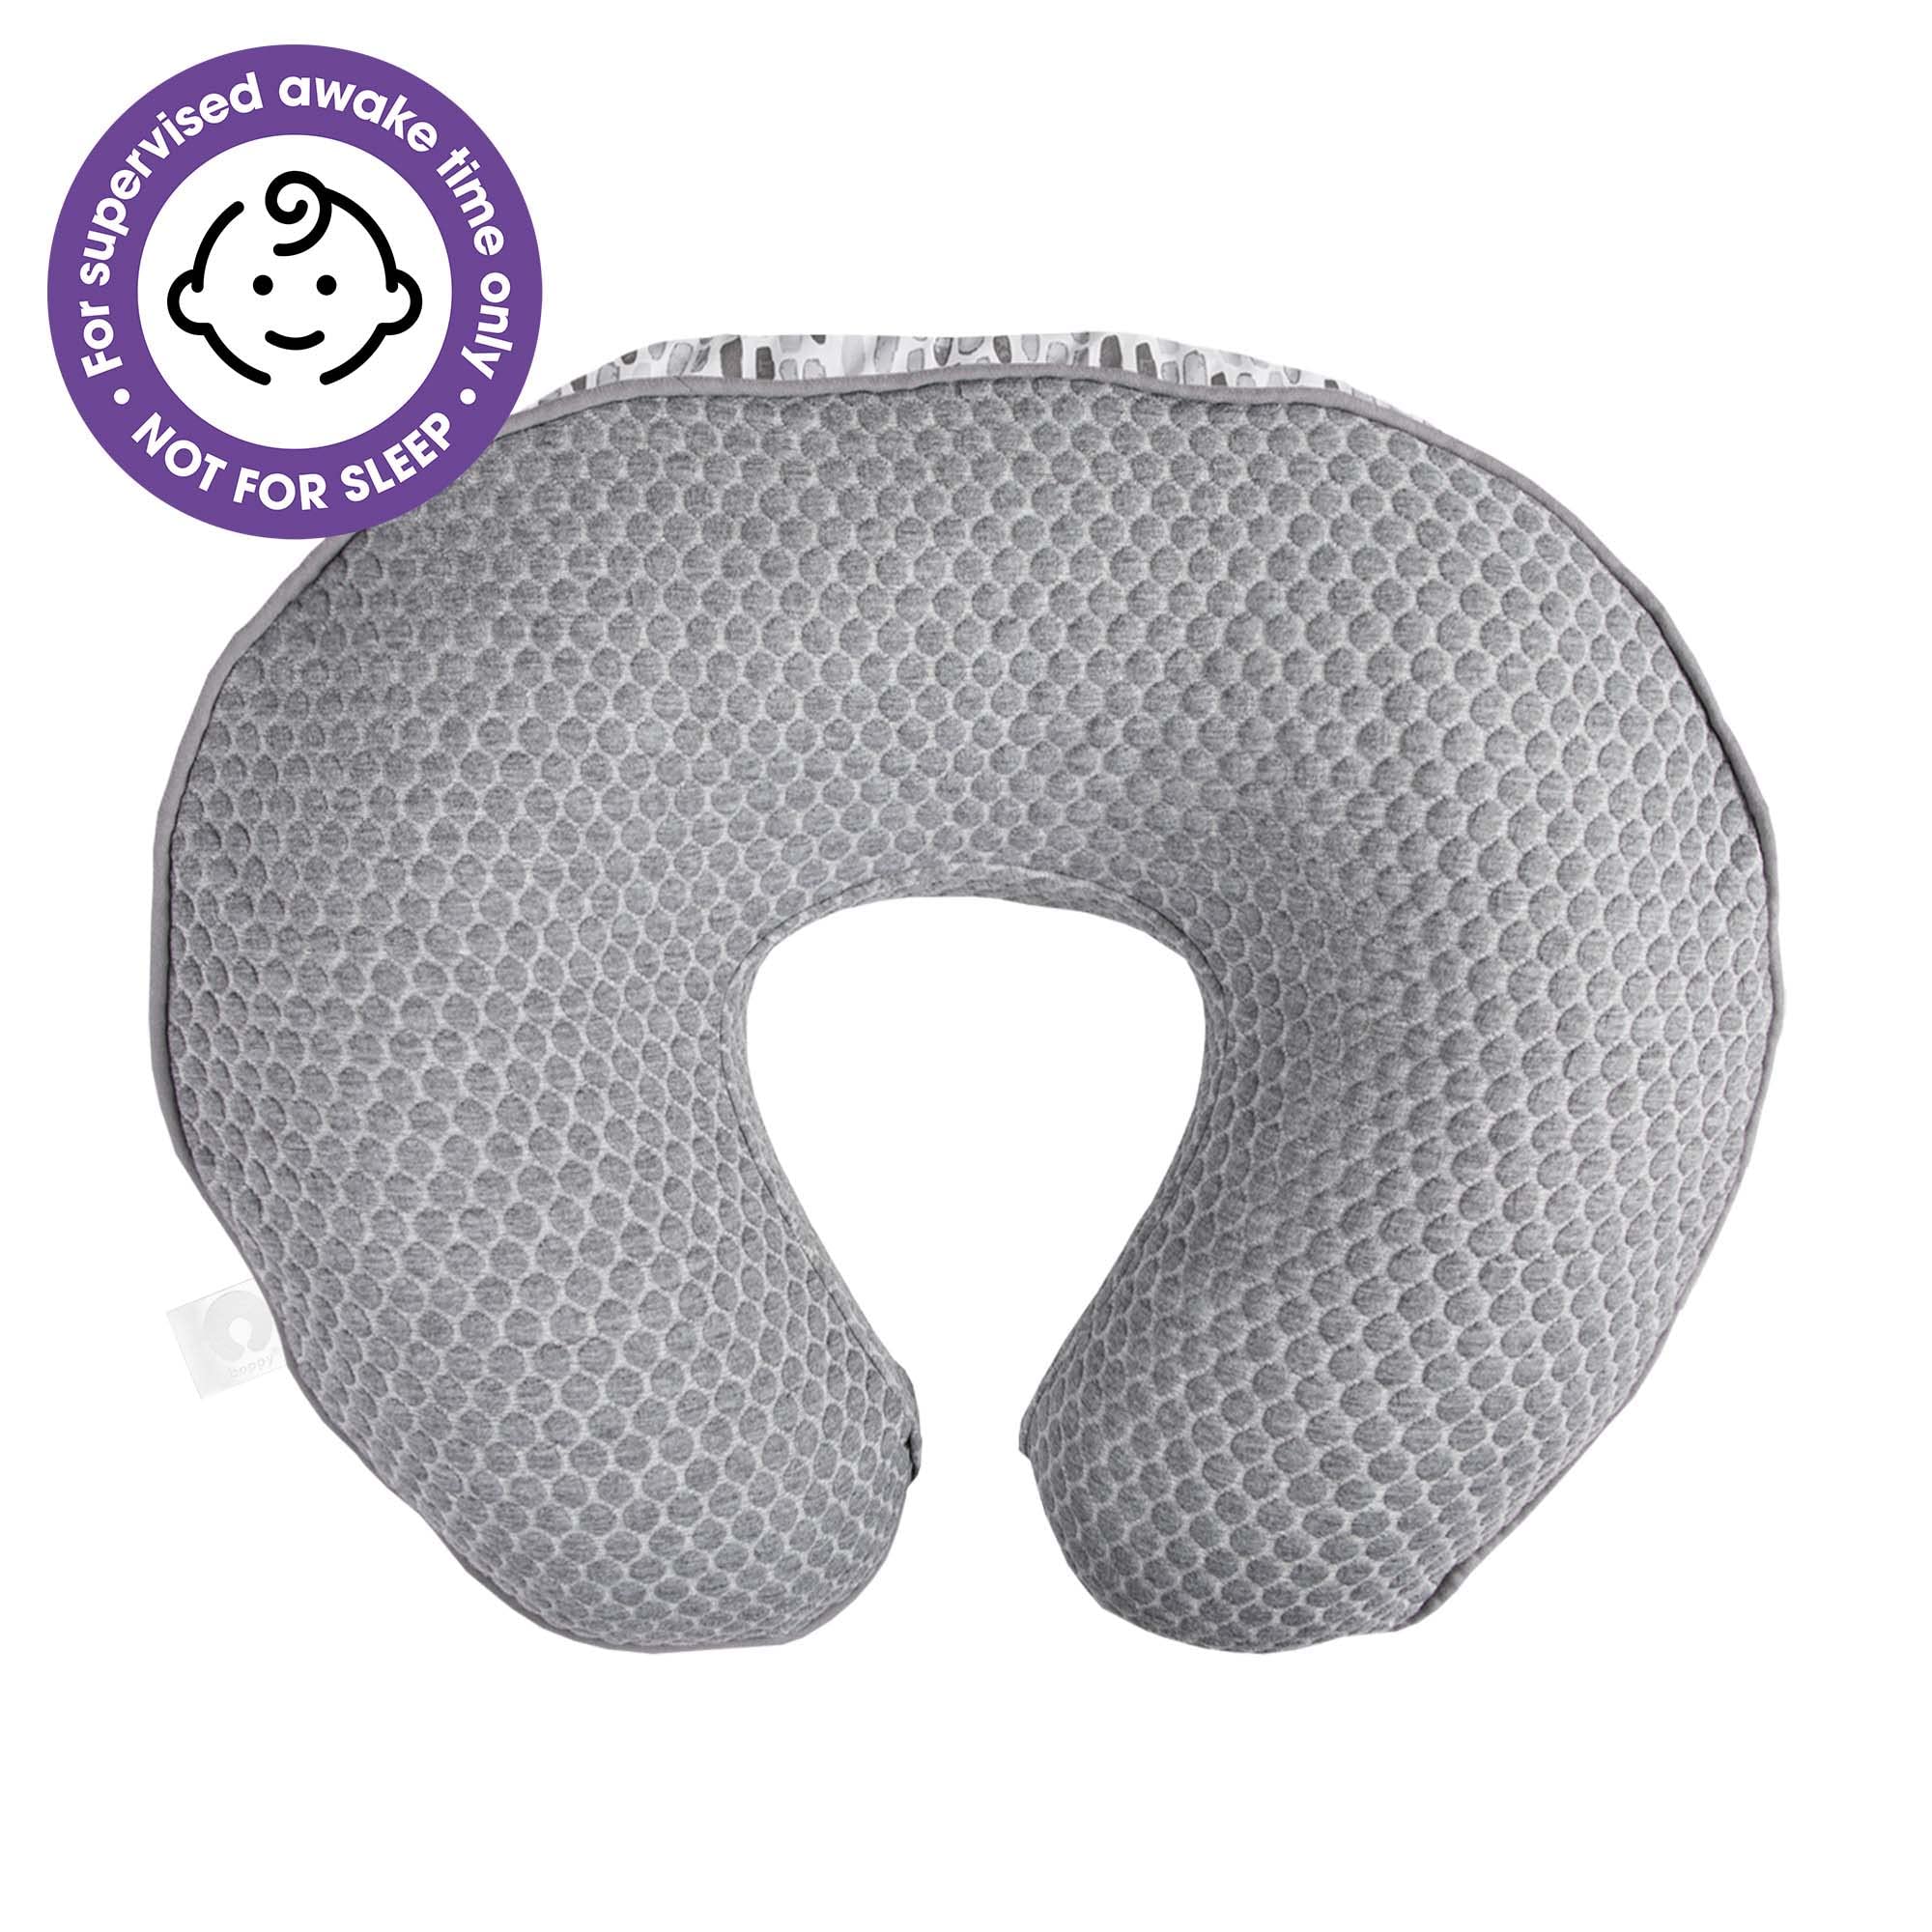 Boppy Nursing Pillow Luxe Support , Gray Brushstroke Pennydot, Ergonomic Nursing Essentials for Bottle and Breastfeeding, Firm Fiber Fill, with Soft Removable Nursing Pillow Cover, Machine Washable